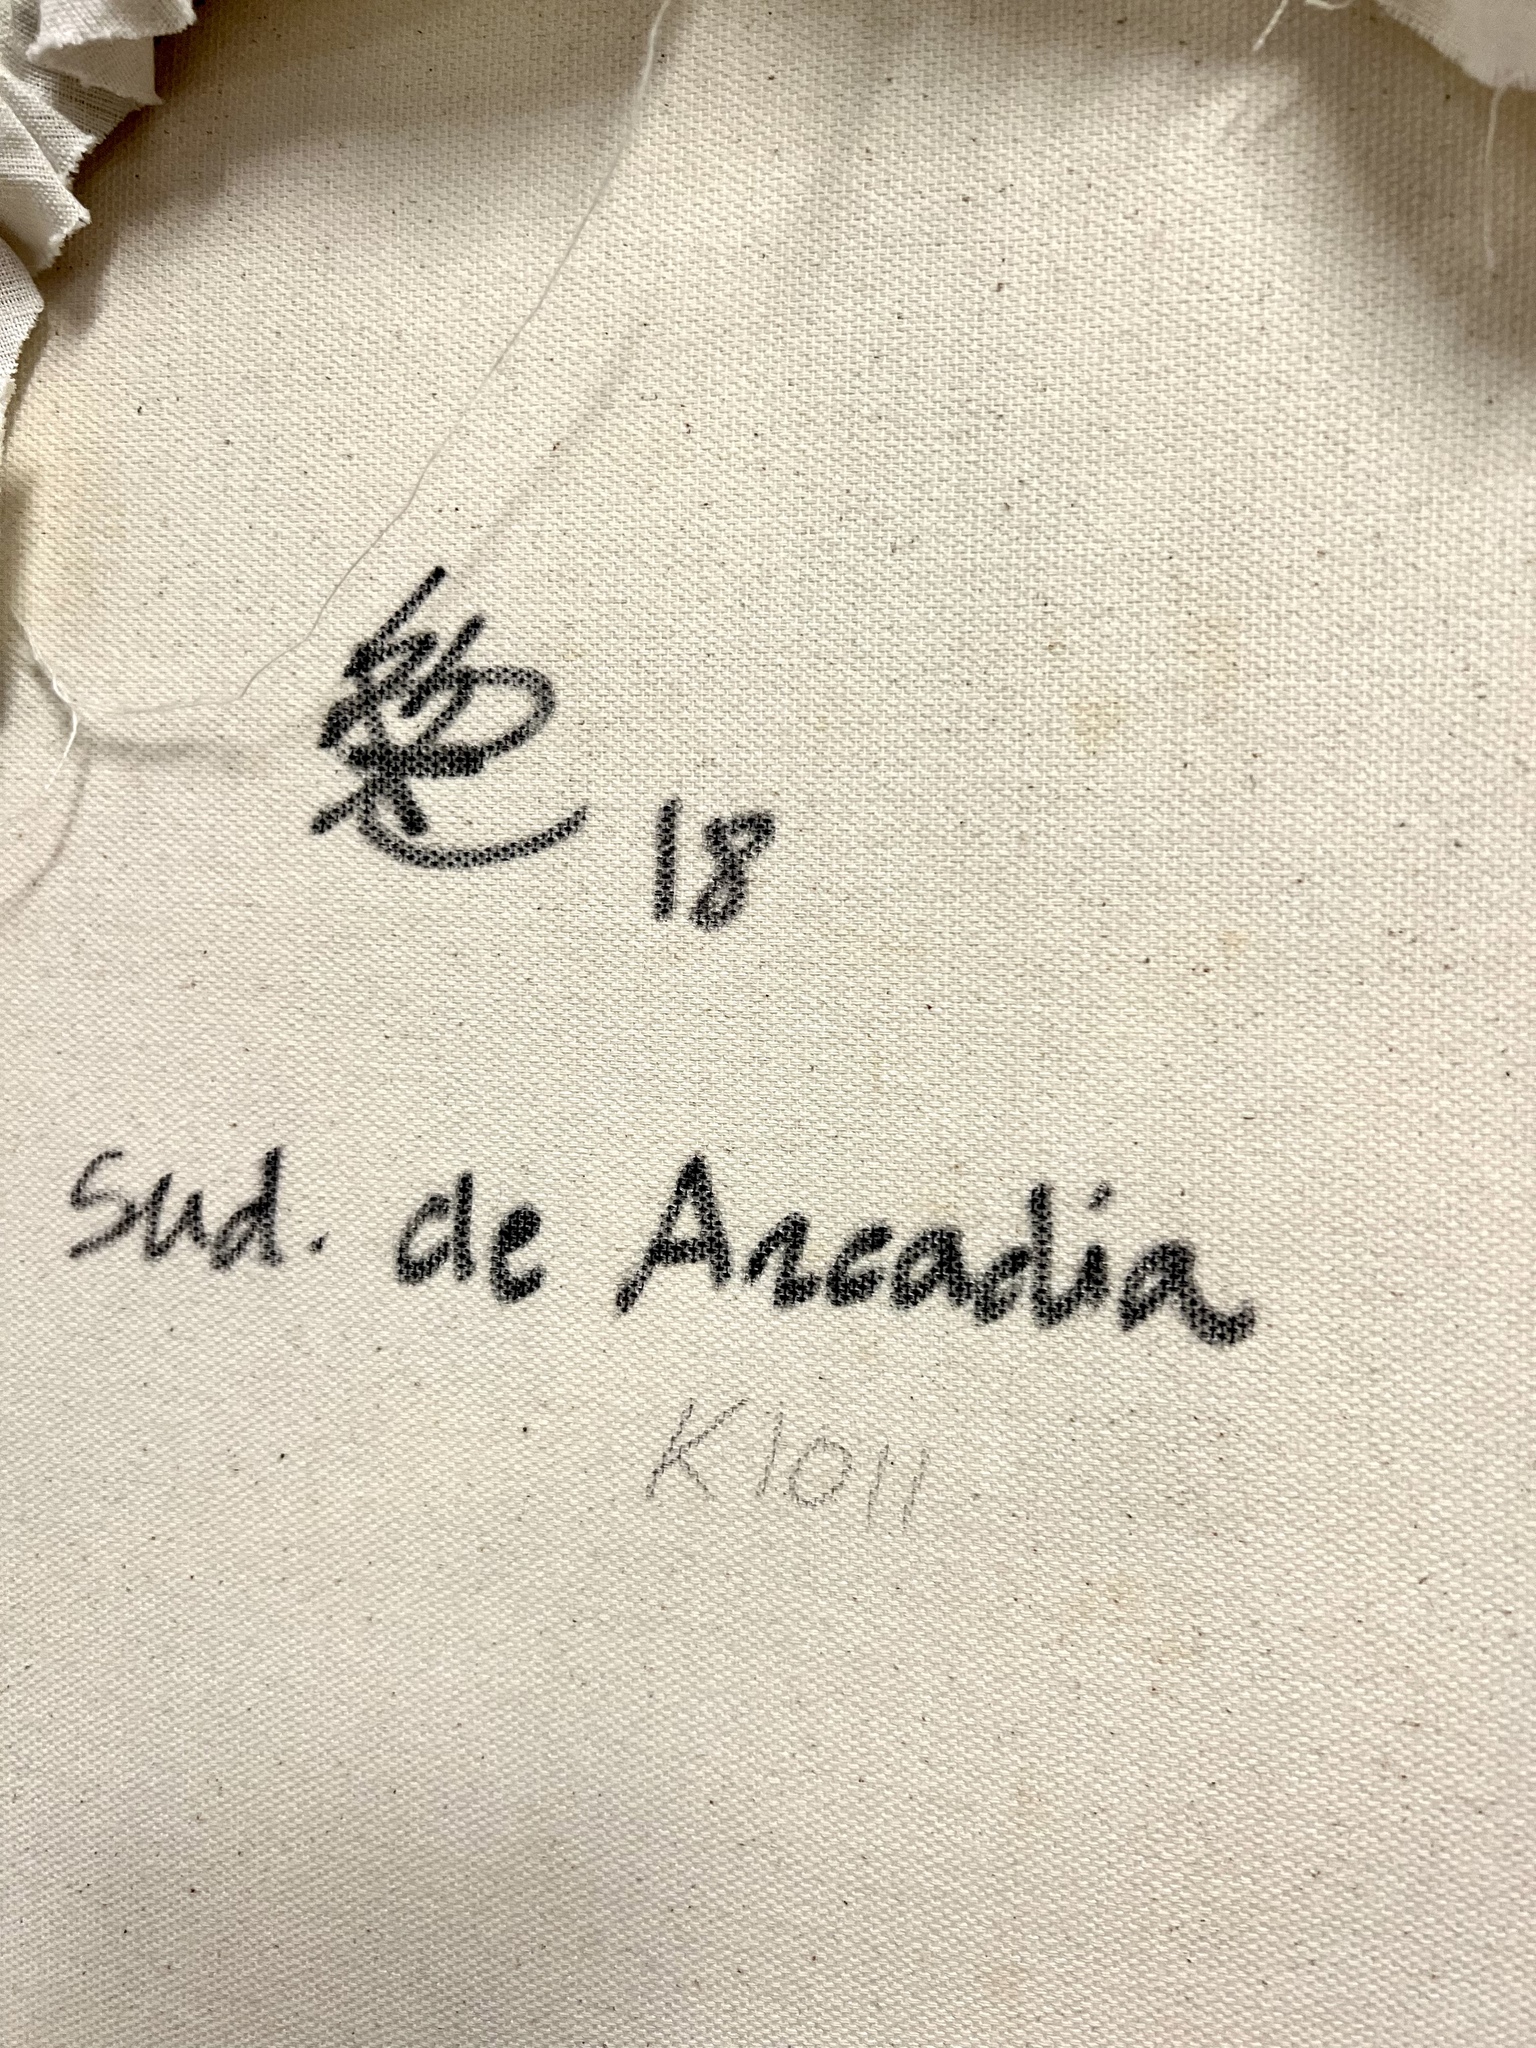 "Sud. de Arcadia" Olja på duk av Christóbal Ortega. 40x50 cm